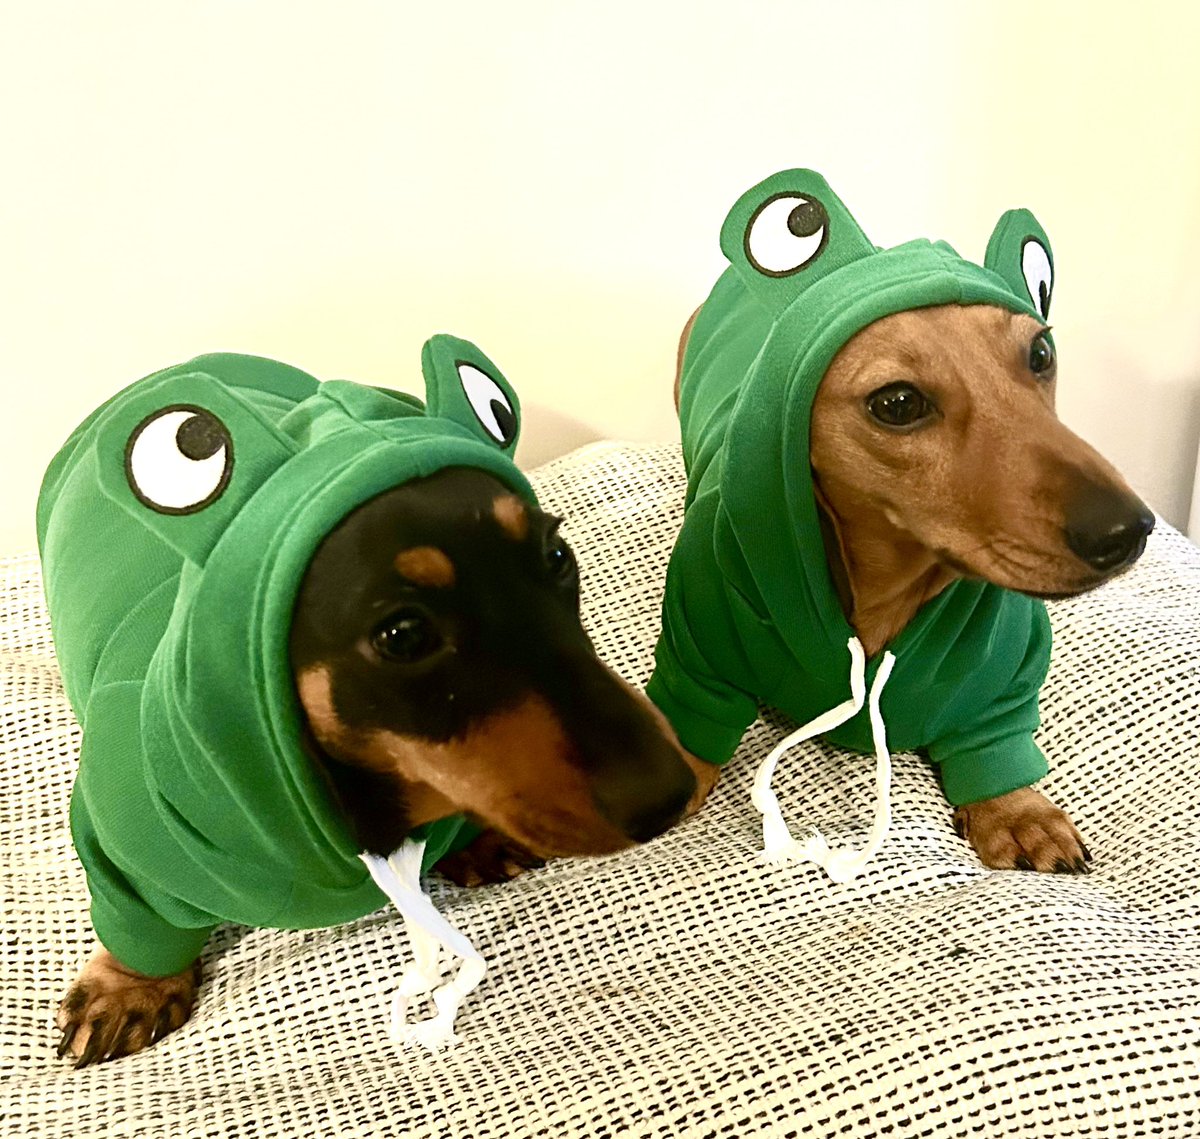 #Christmas frogs 🐸 

#dachshund 
#miniDachshund
#sausagedogs